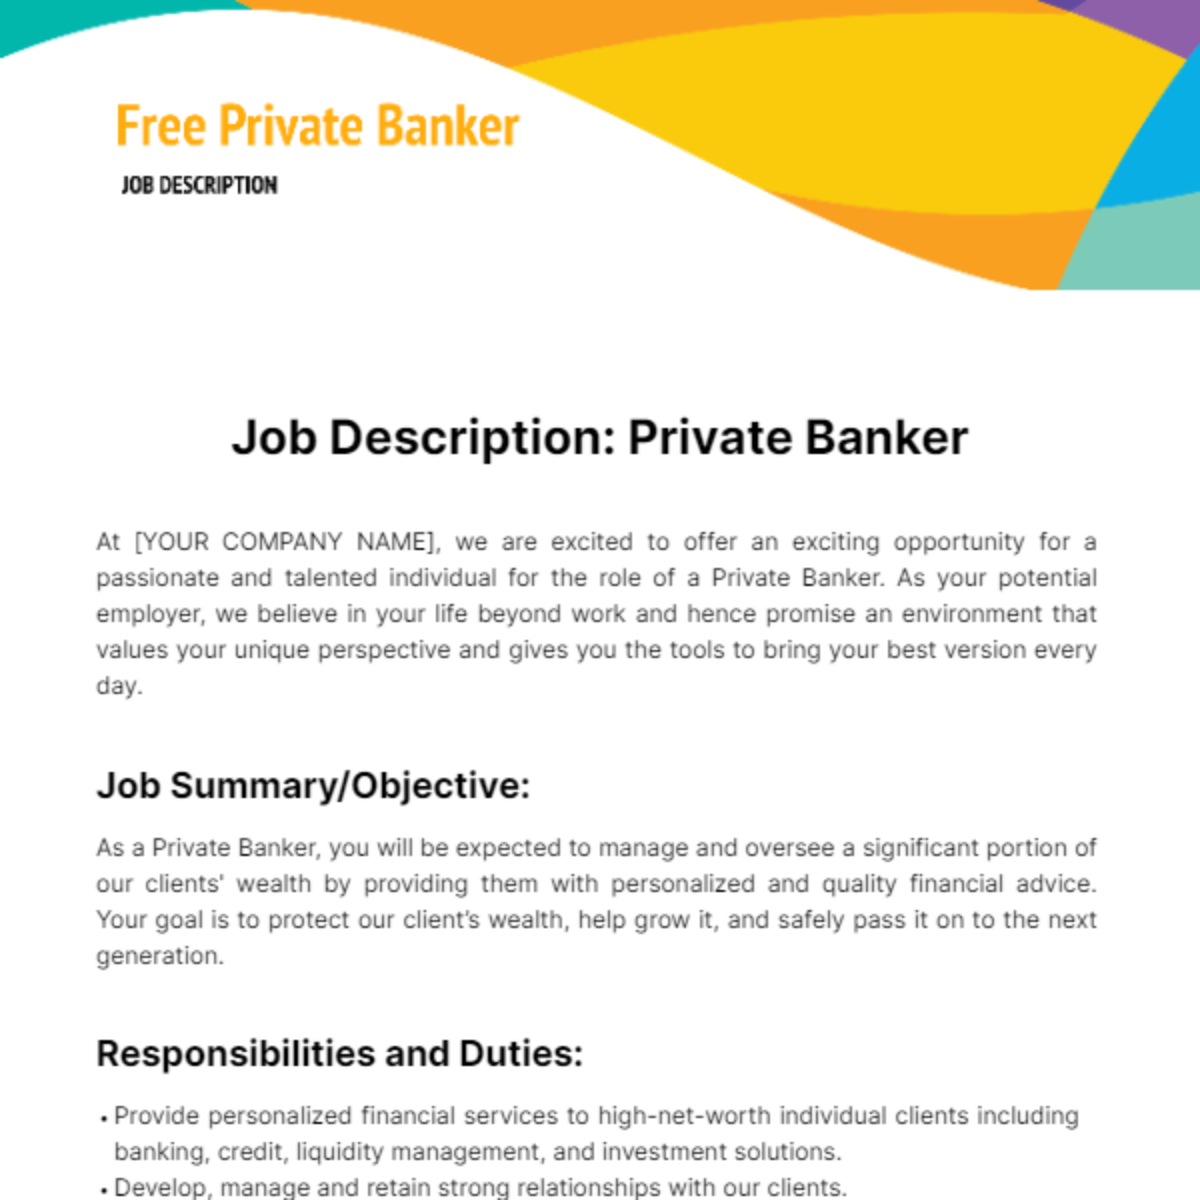 Free Private Banker Job Description Template